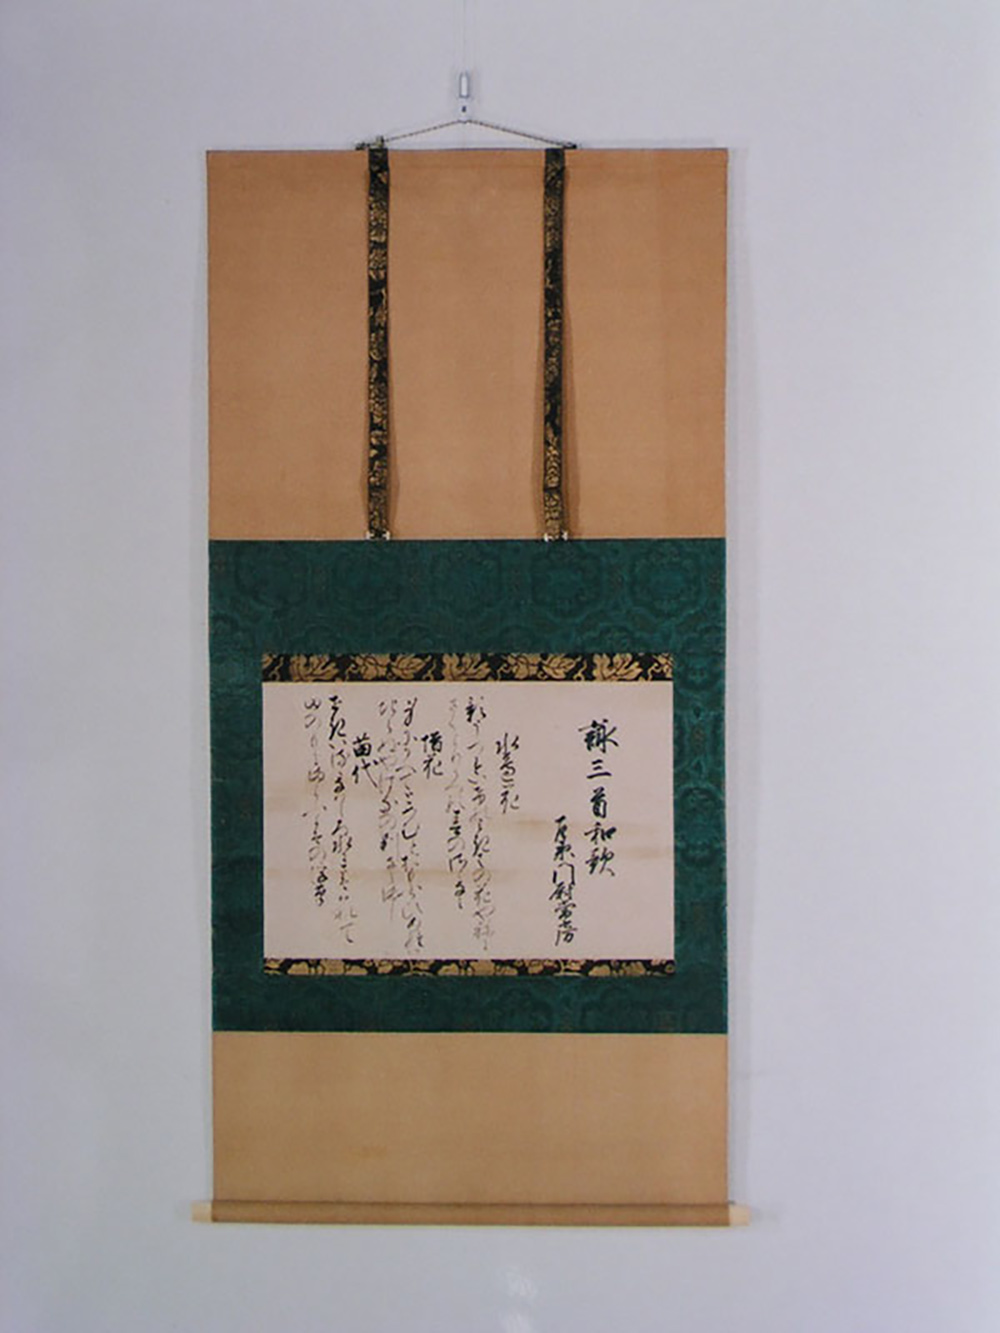 飯尾常房（Inoo Tunefusa）1422～1485年